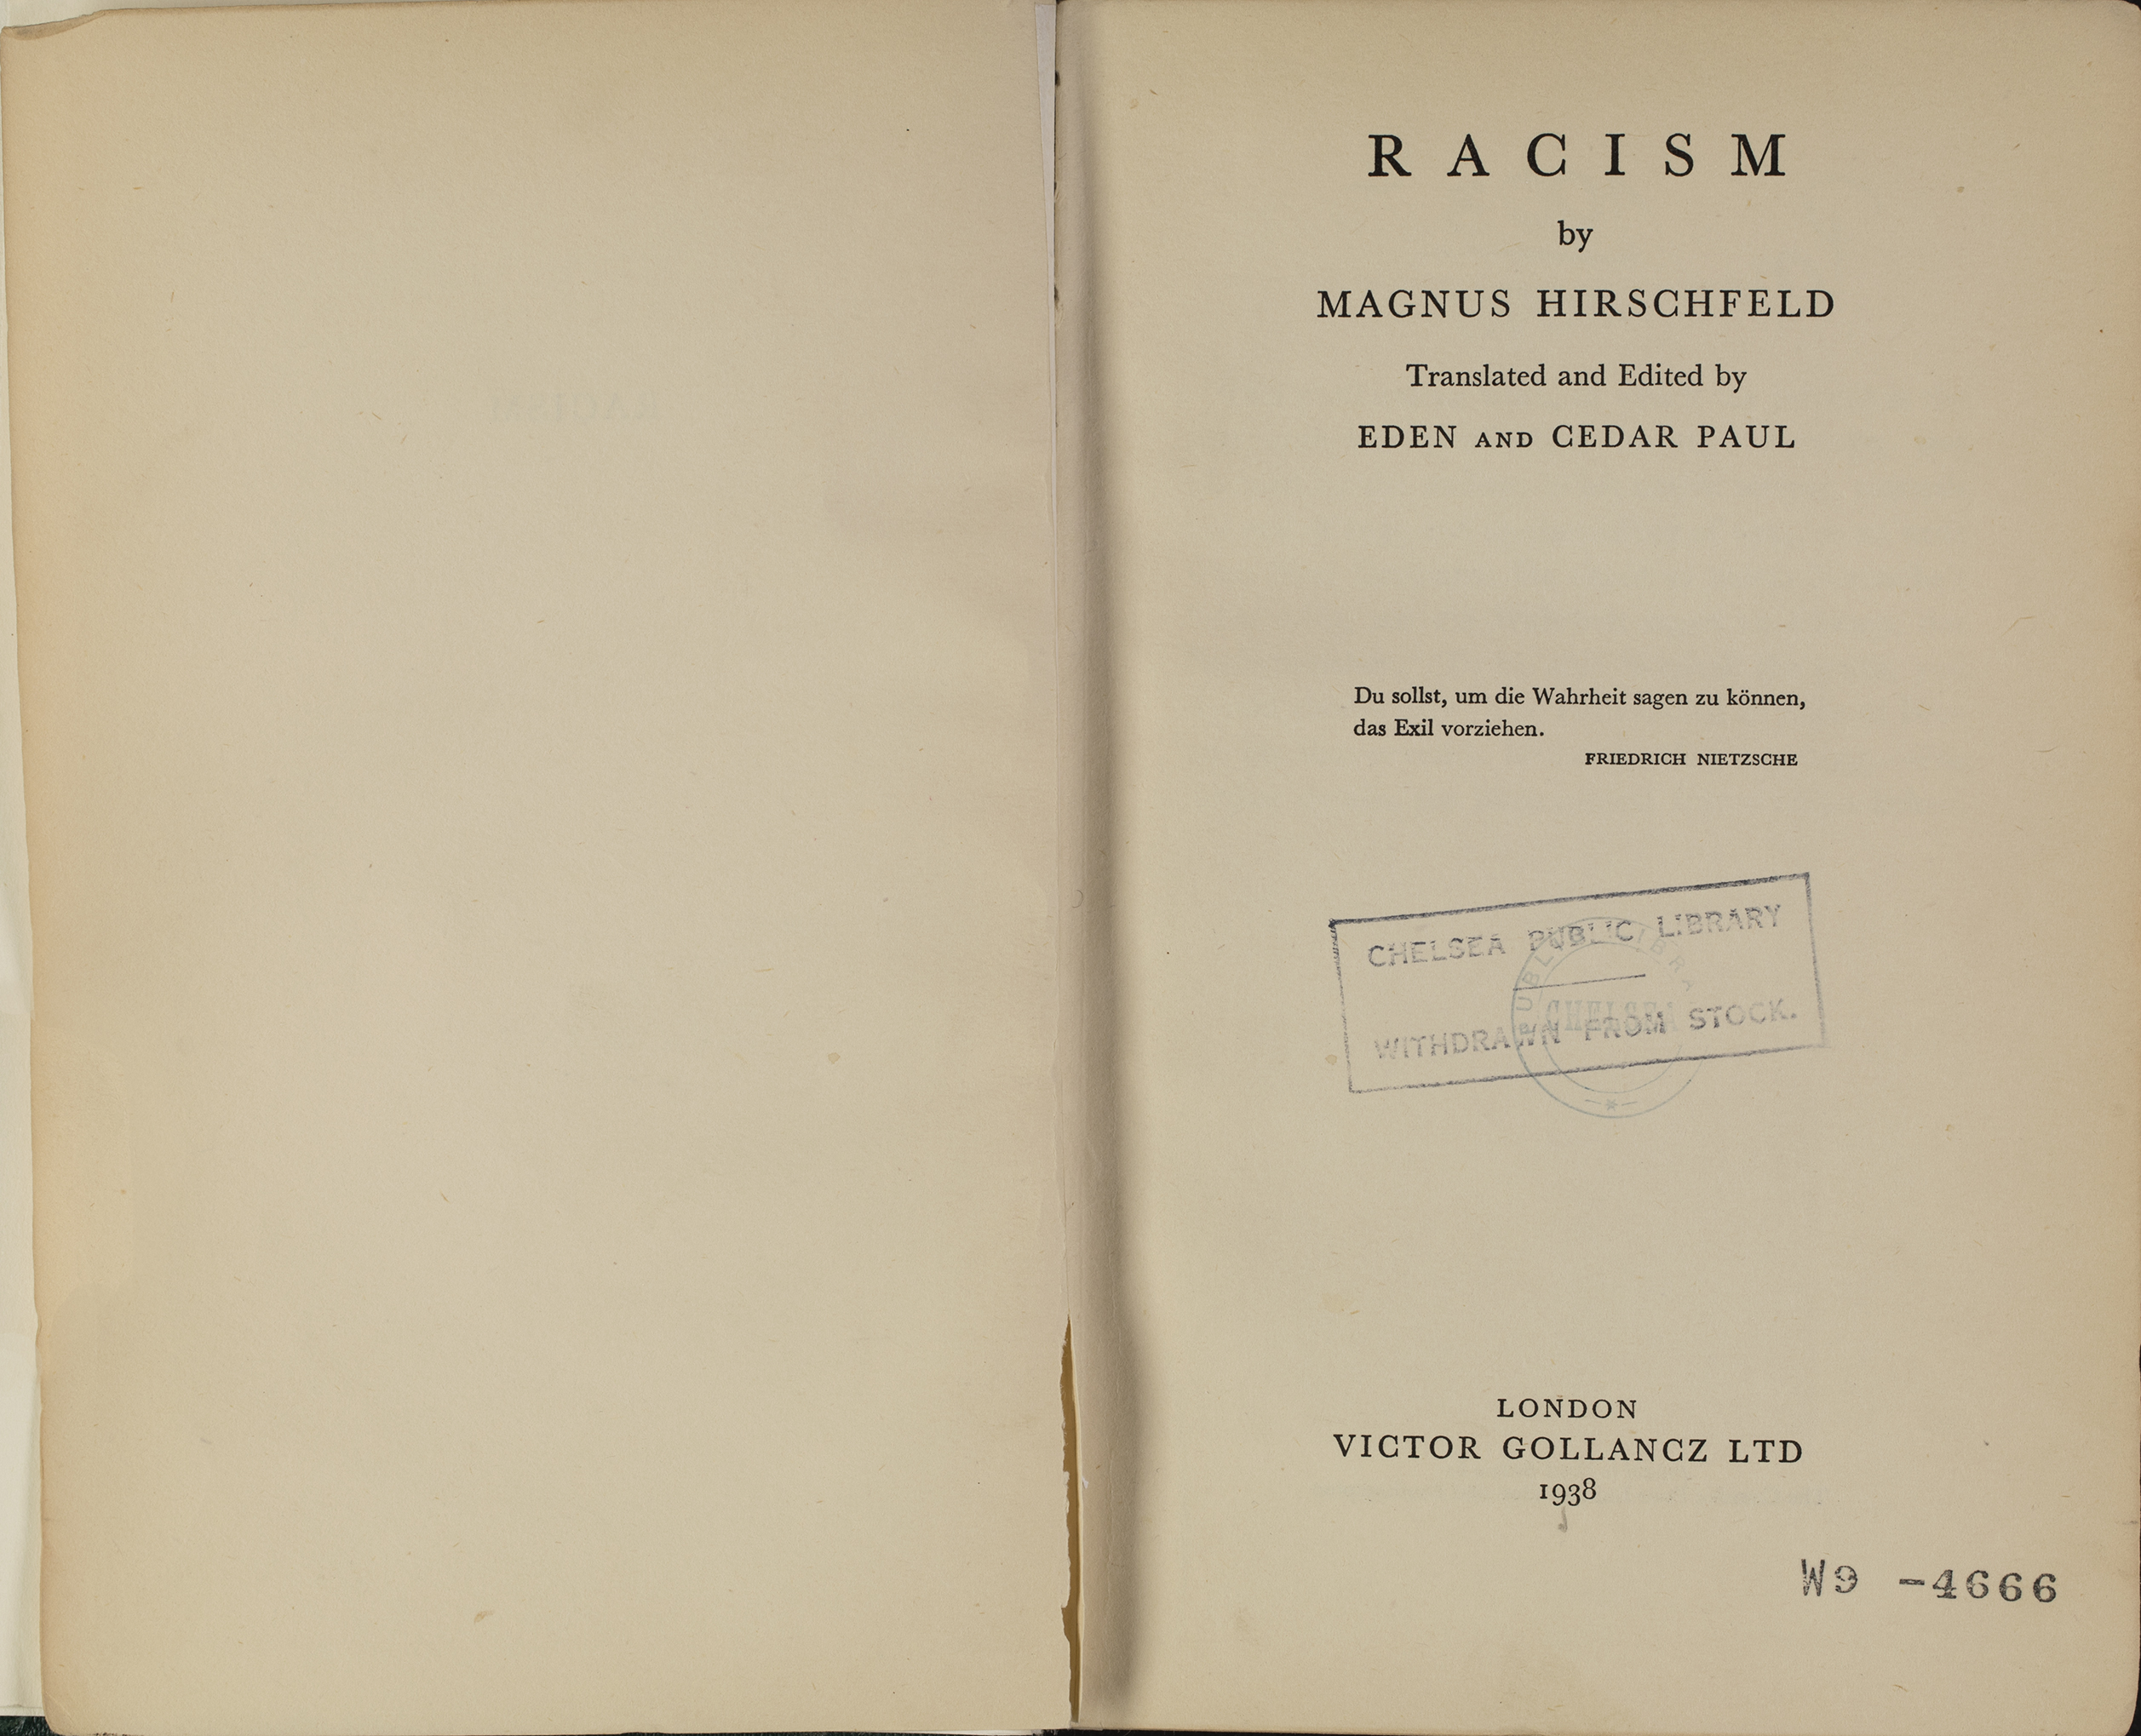 Magnus Hirschfeld: Racism. Translated and edited by Eden and Cedar Paul. London: Gollancz, 1938. Signatur: Pn 1003/1095